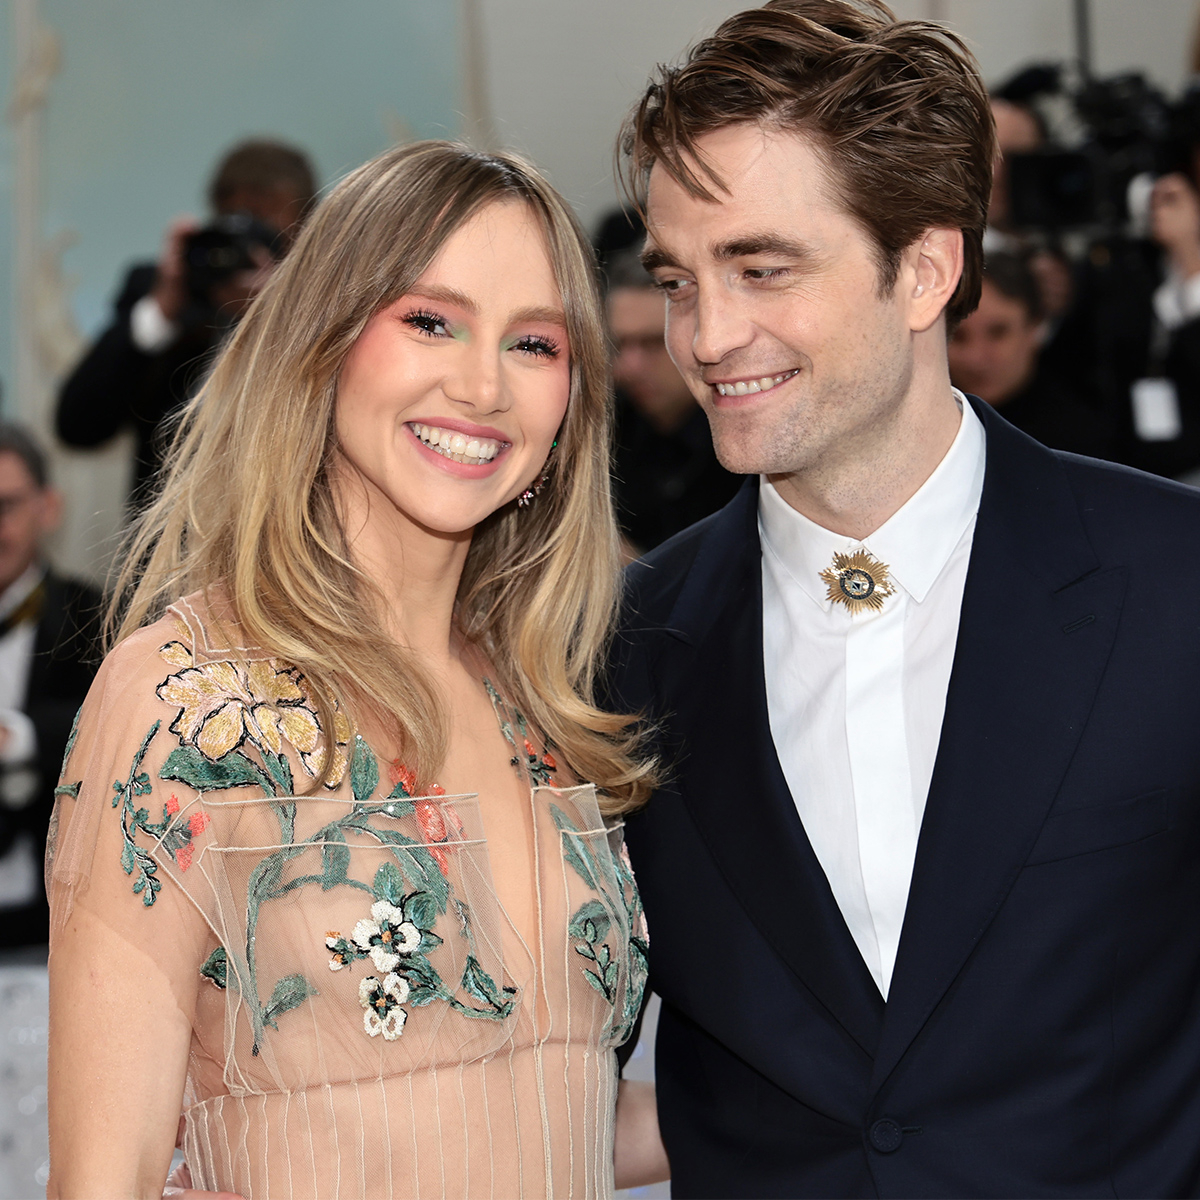 Suki Waterhouse Shares First Photo of Her and Robert Pattinson's Baby